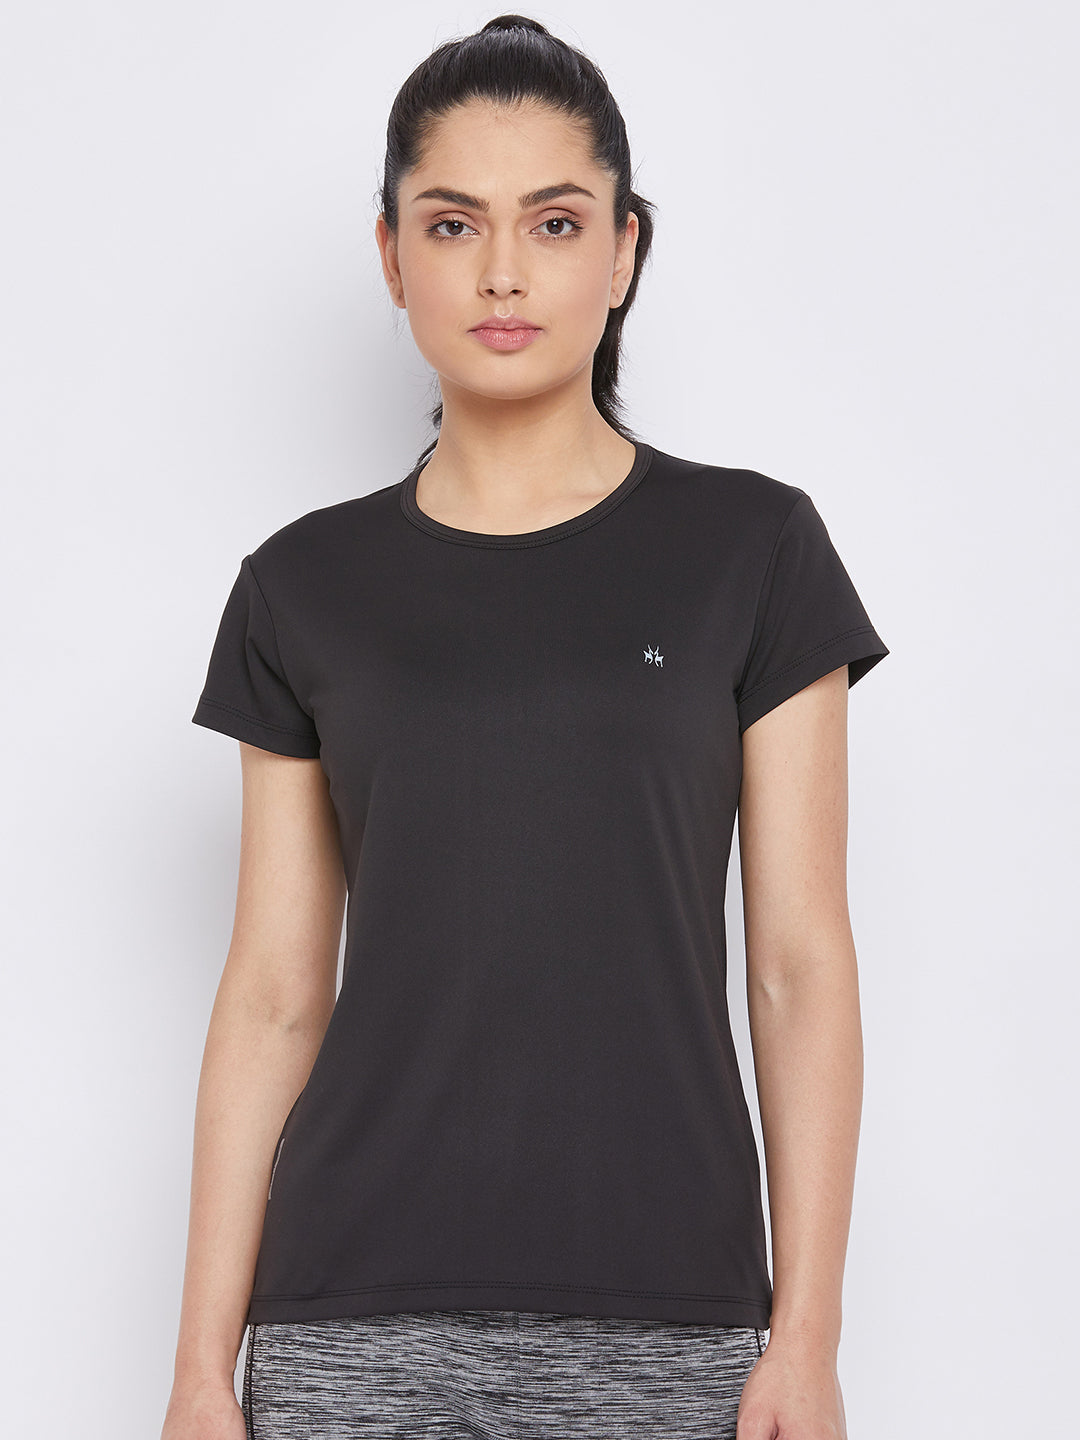 Black Sports T-shirt - Women T-Shirts